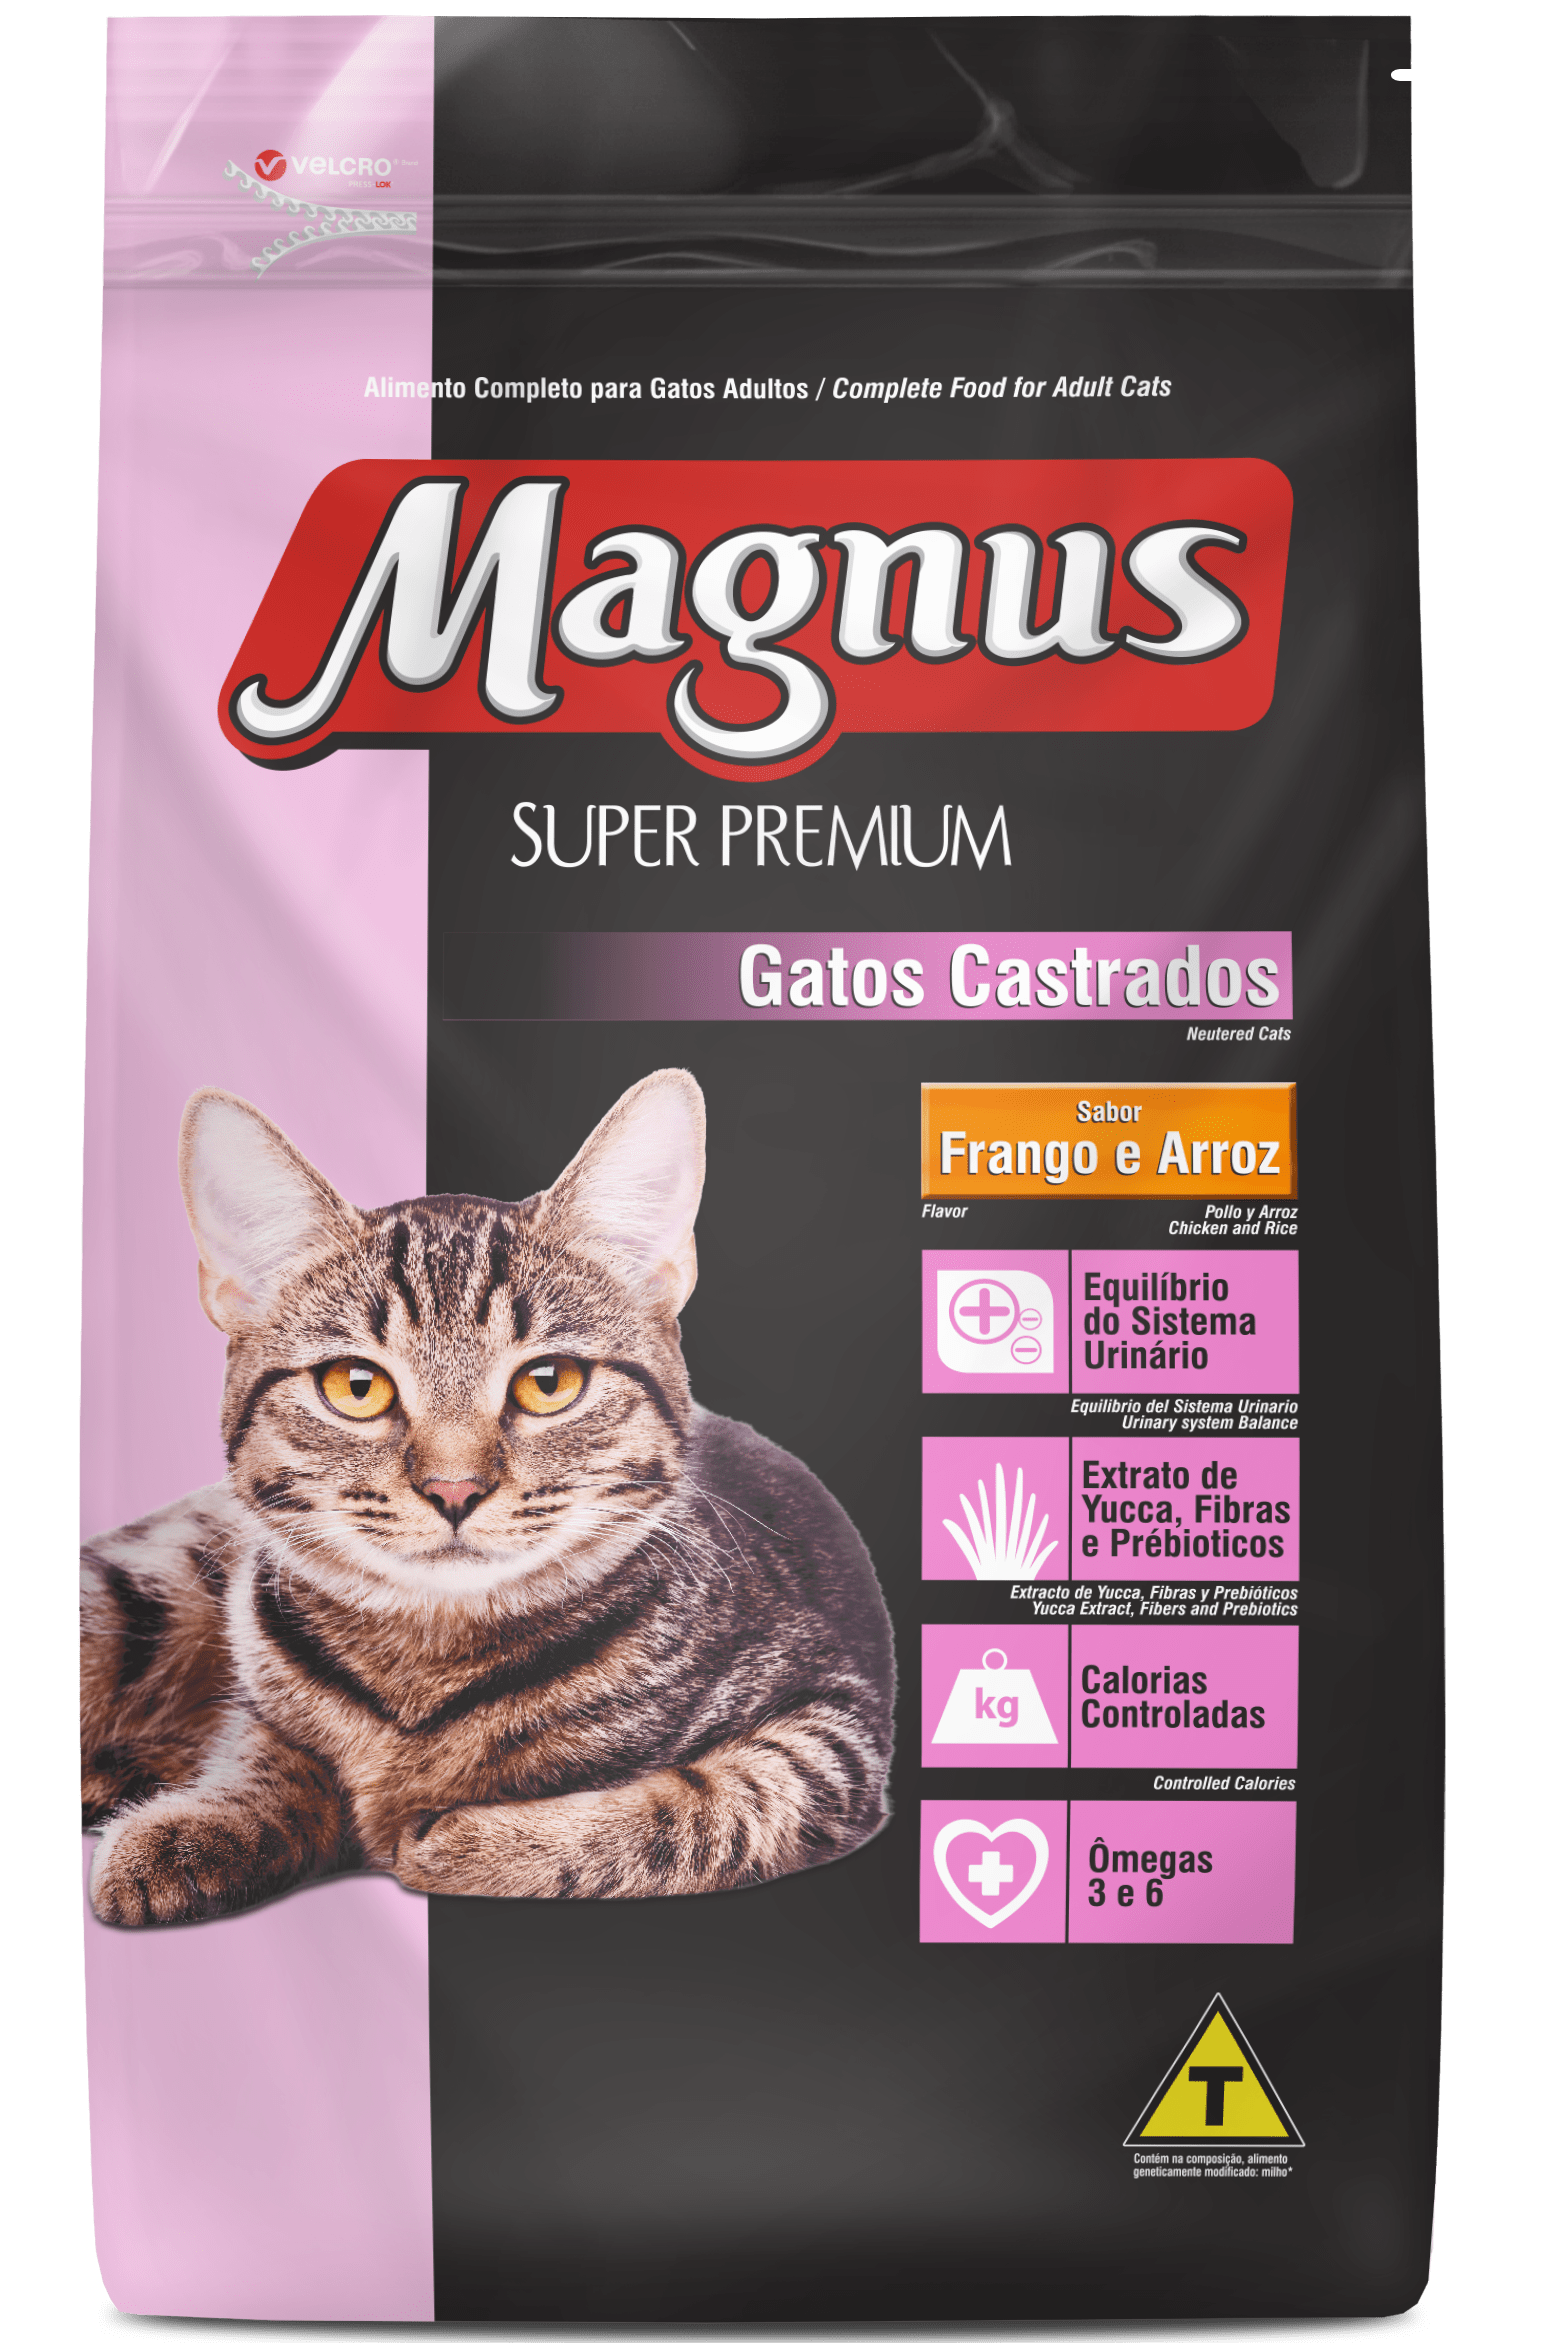 Magnus Super Premium Neutered Cats – Chicken and Rice Flavor